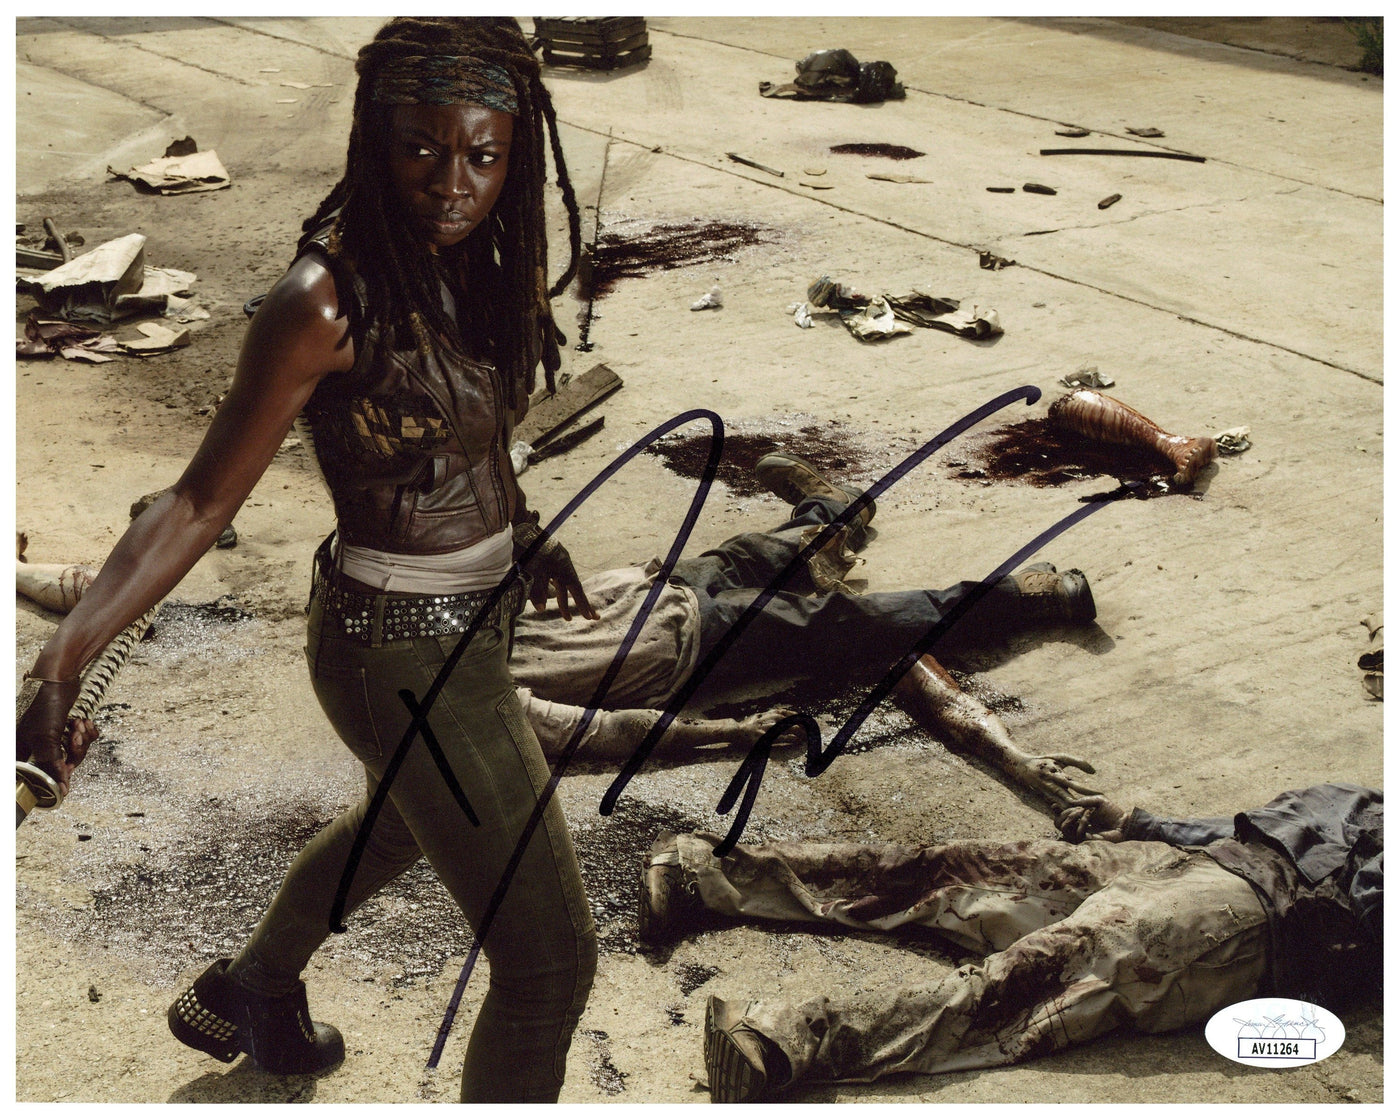 Danai Gurira Signed 8x10 Photo The Walking Dead Michonne Autographed JSA COA #3